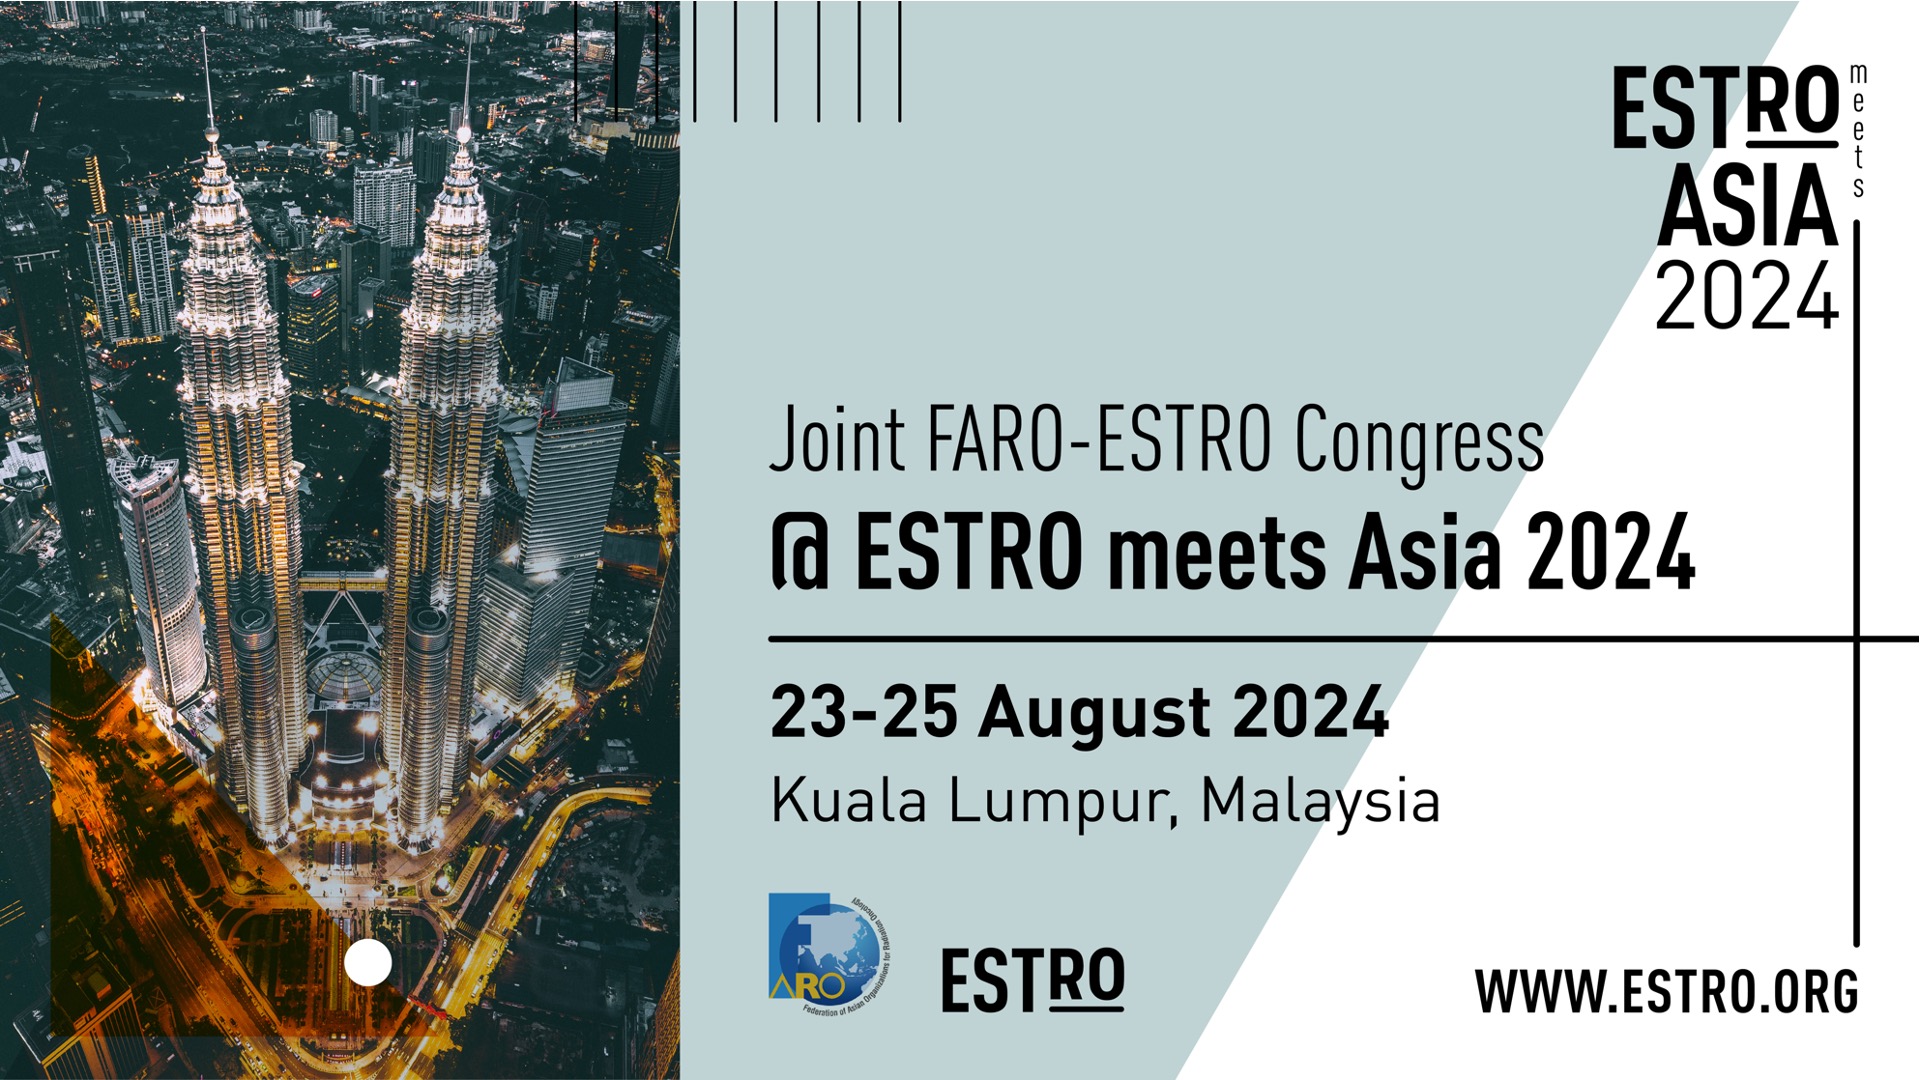 https://www.estro.org/Congresses/Estro-meets-Asia-2024